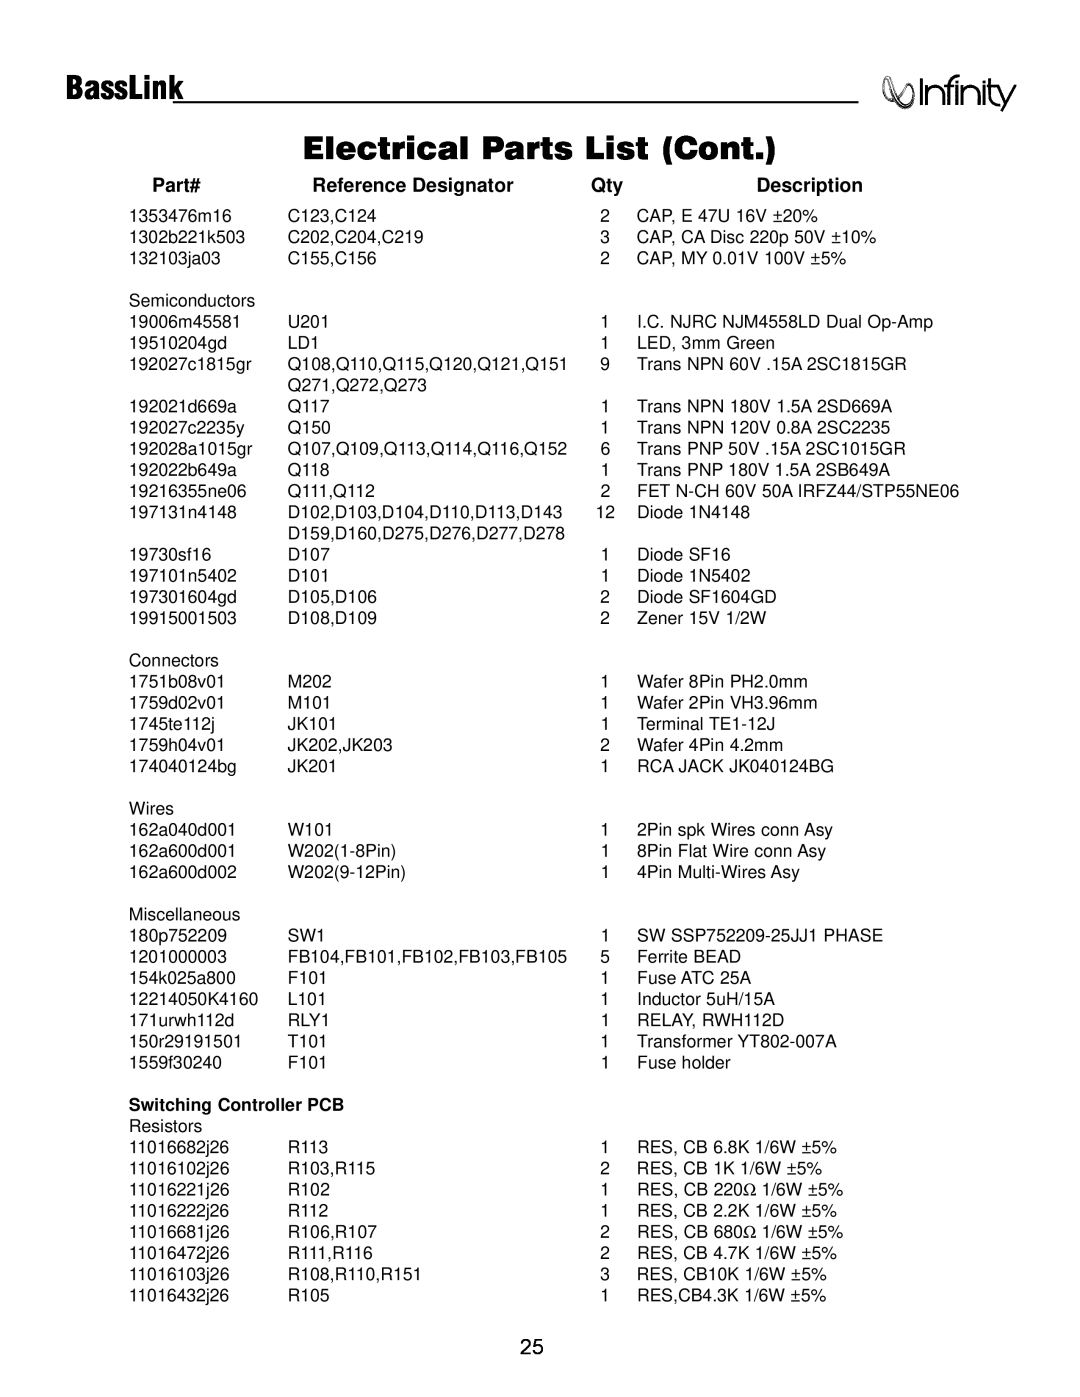 Infinity Bass Link service manual Electrical Parts List Cont, BassLink, Part#, Reference Designator, Description 